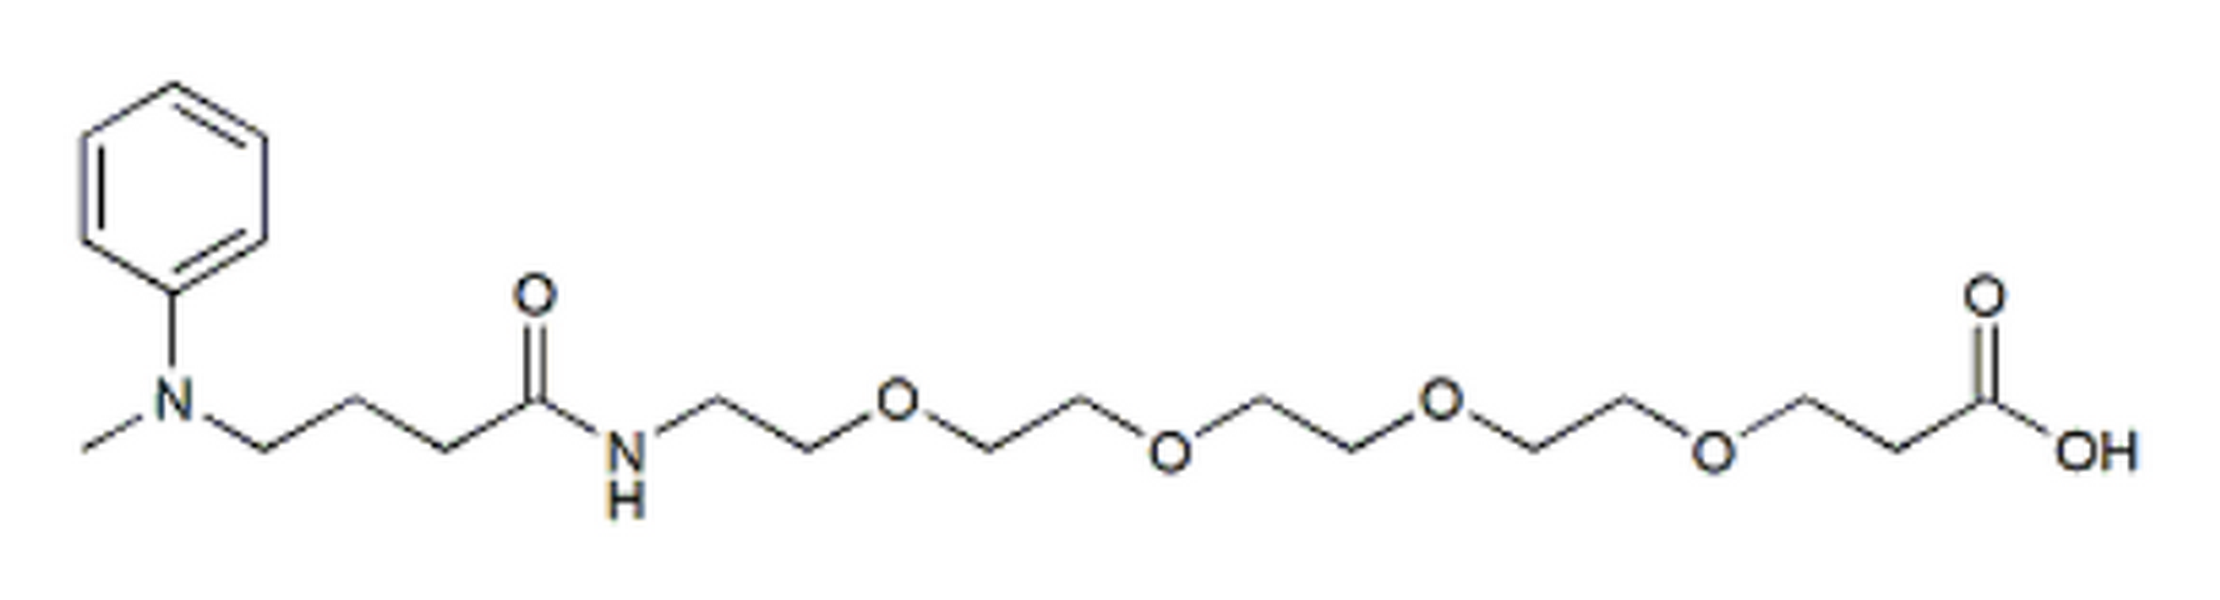 Dimethylanaline-PEG4-acid